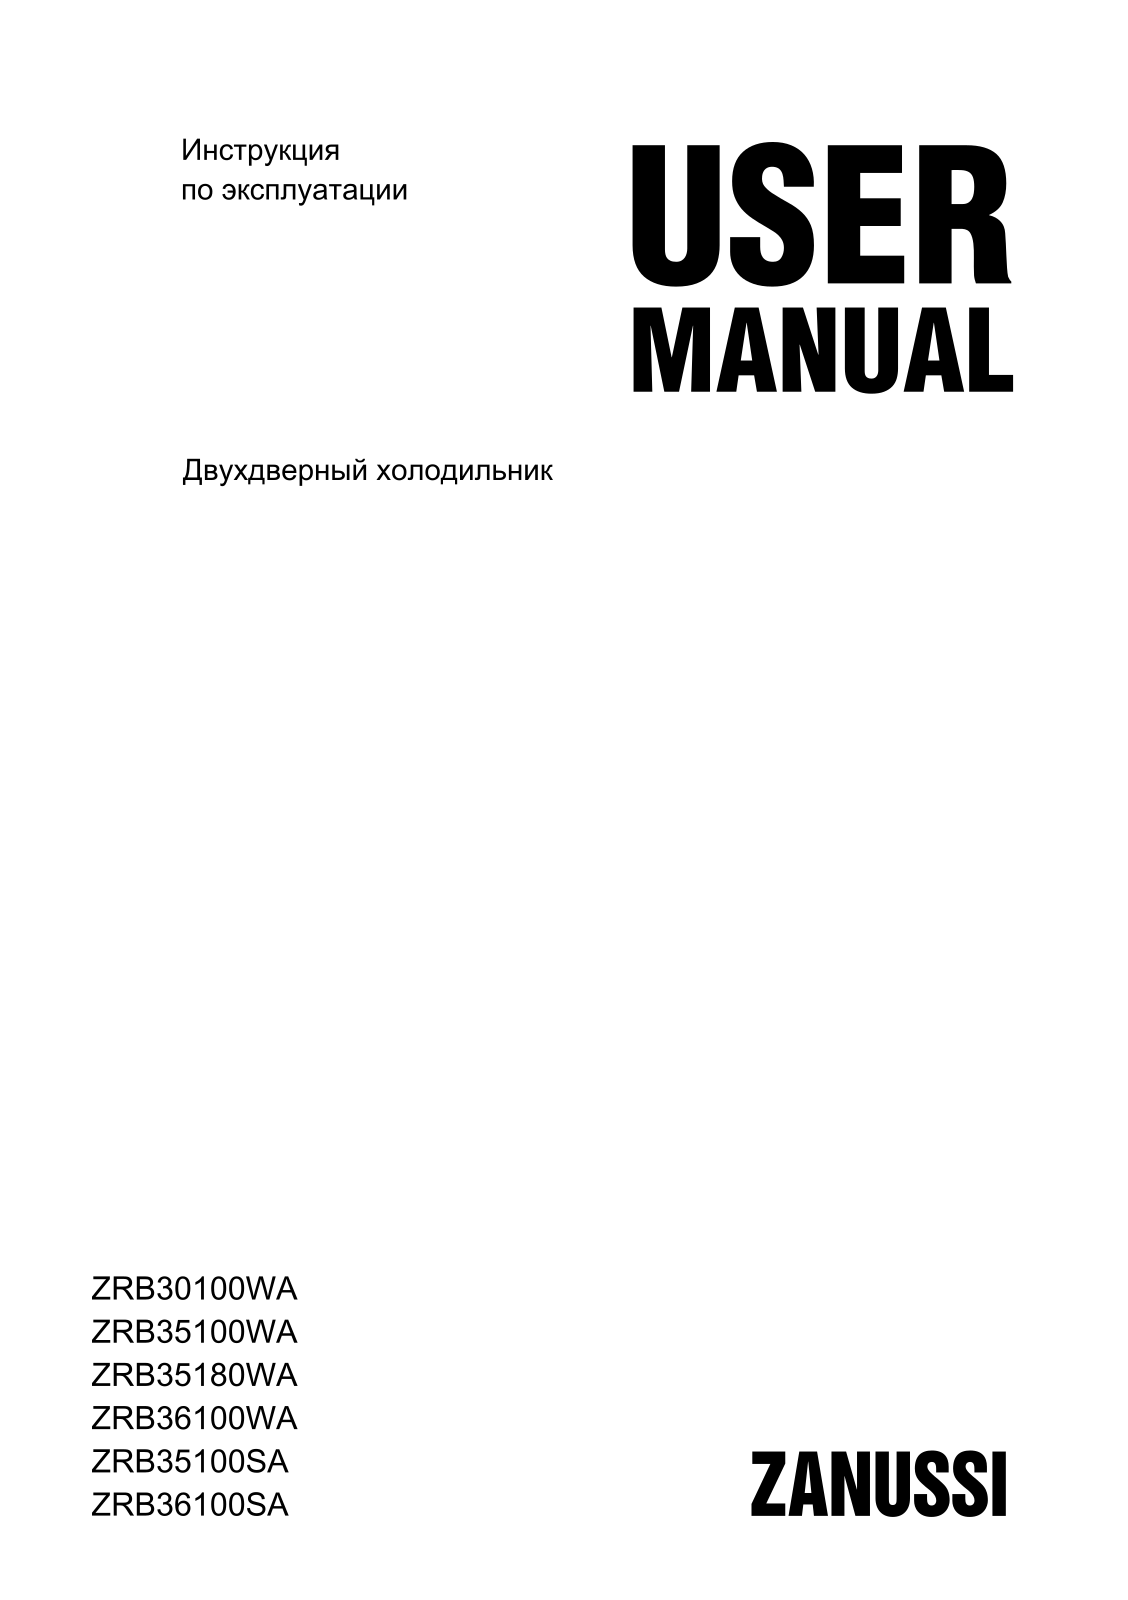 Zanussi ZRB 35100 User Manual